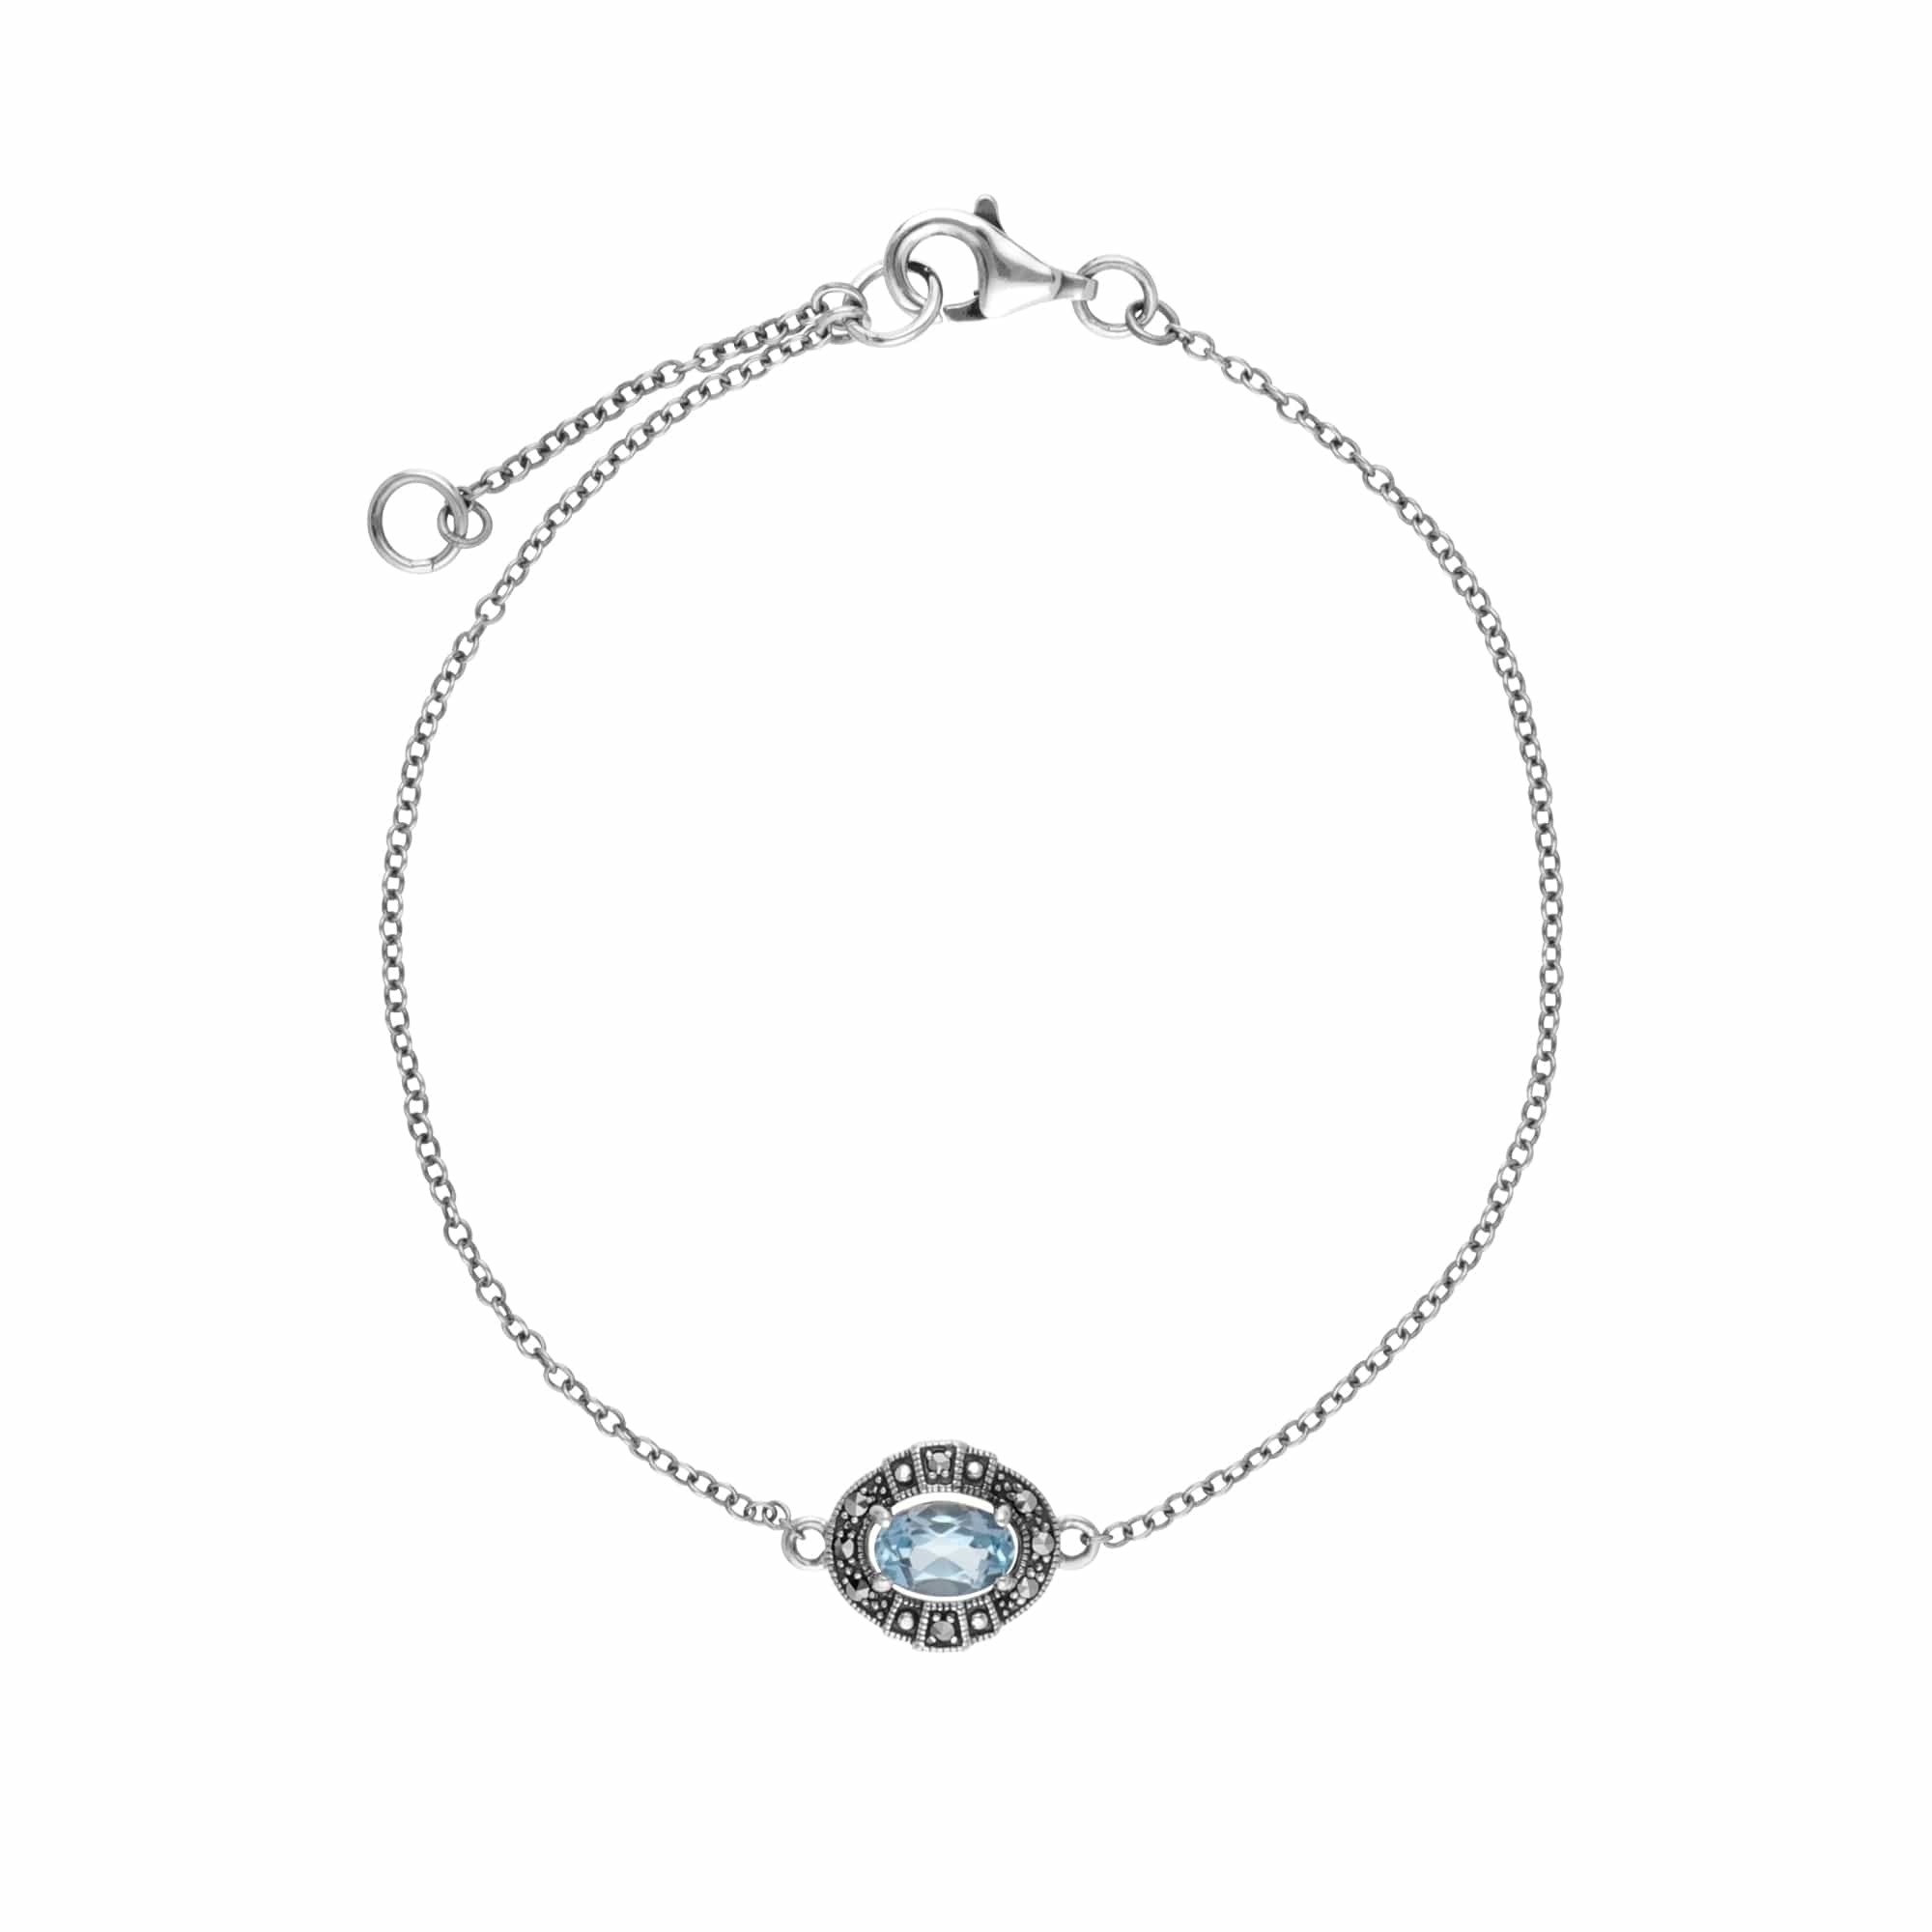 Art Deco Style Oval Blue Topaz & Marcasite Cluster Bracelet in Sterling Silver